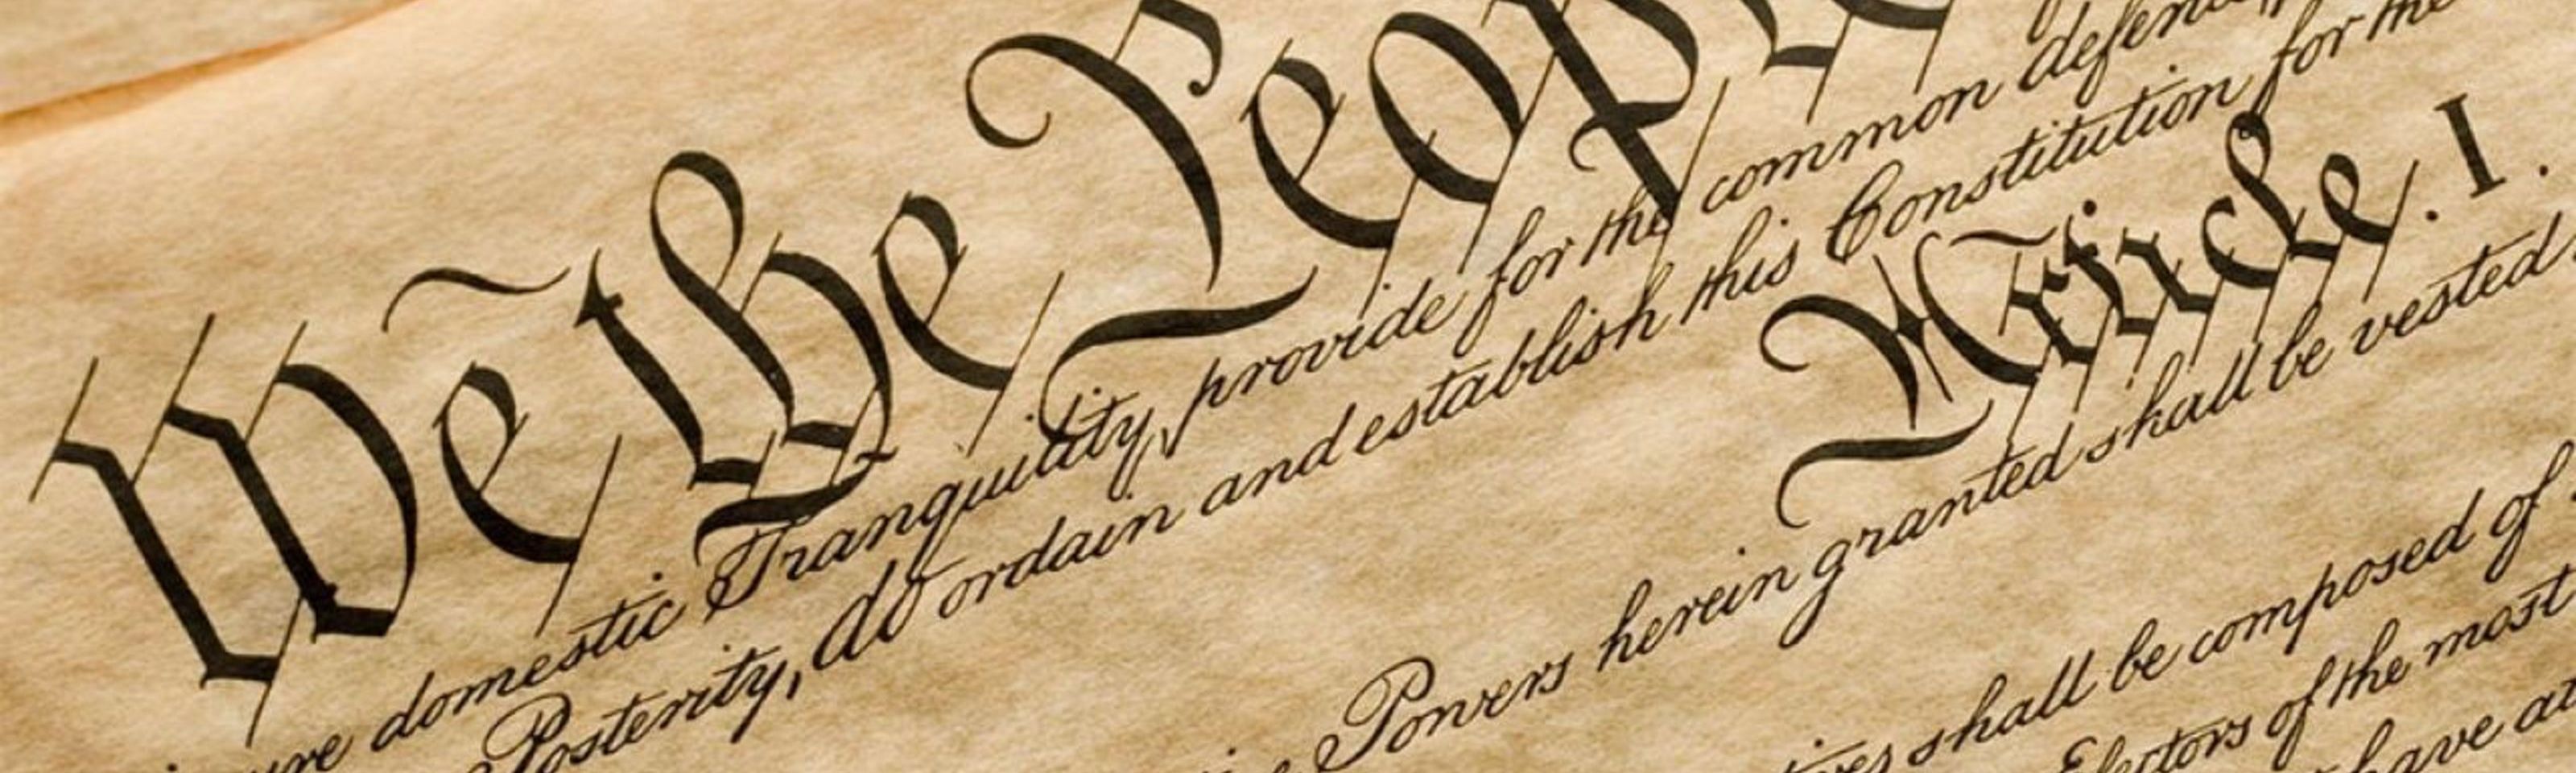 Our constitution